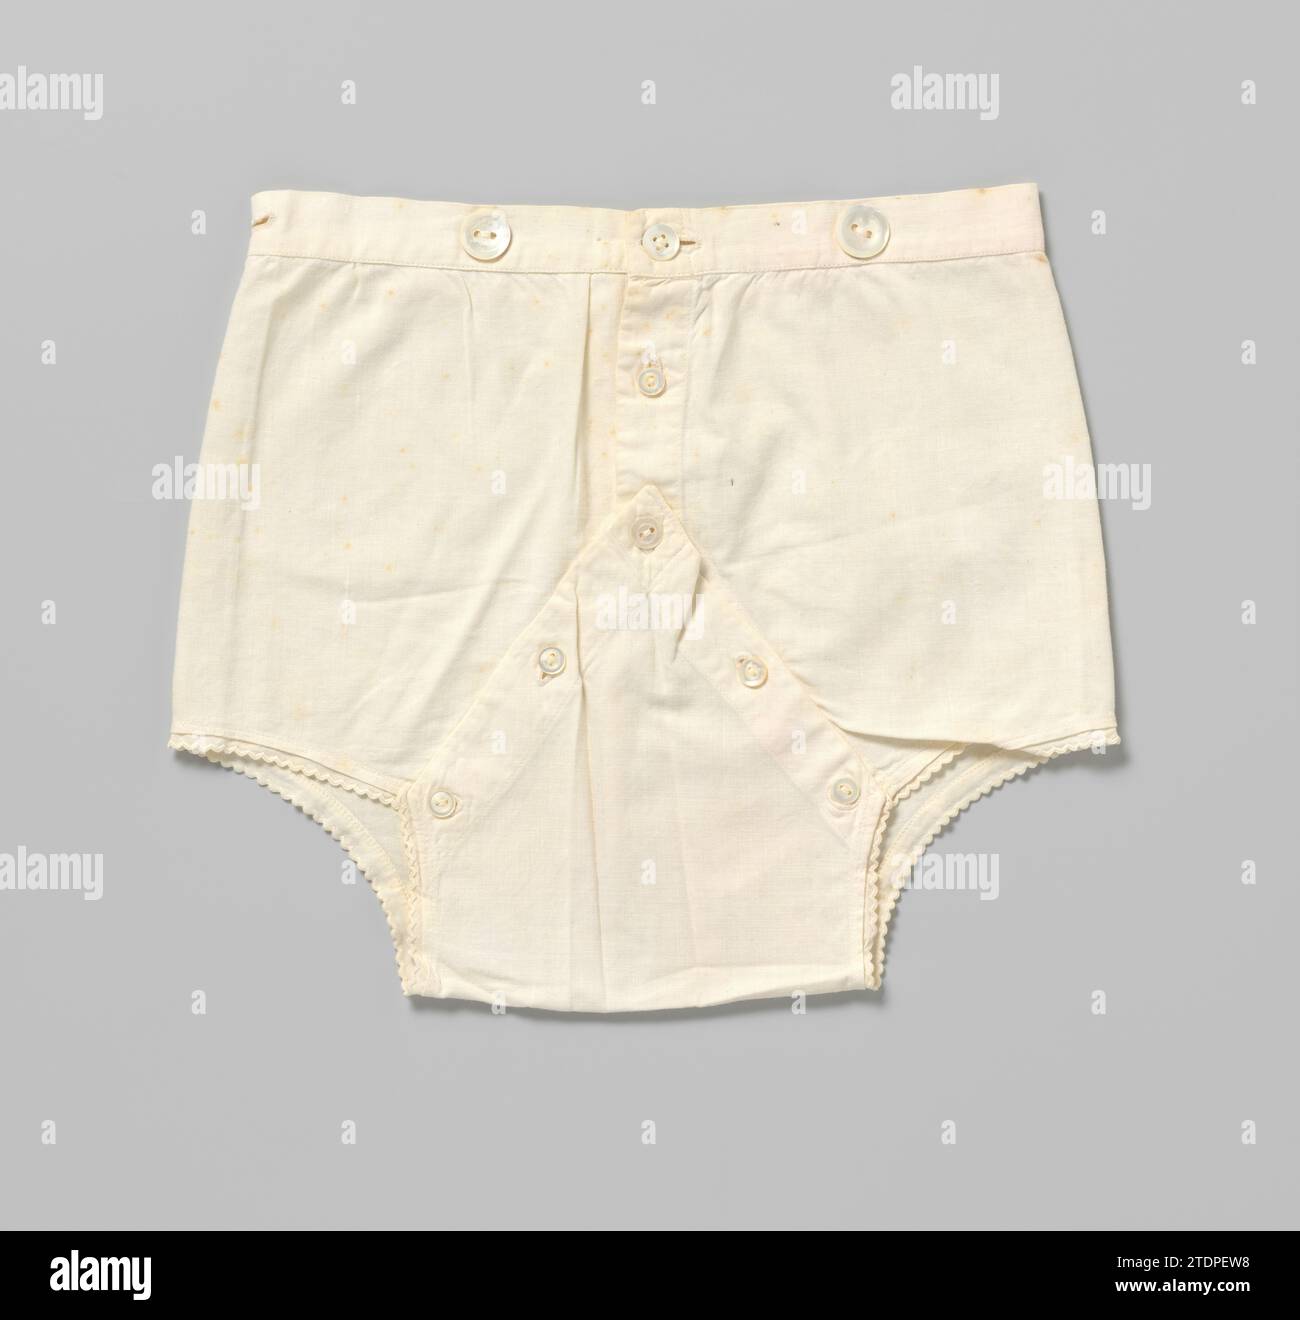 chirdern underwear girl panty, vintage print, cotton Color White